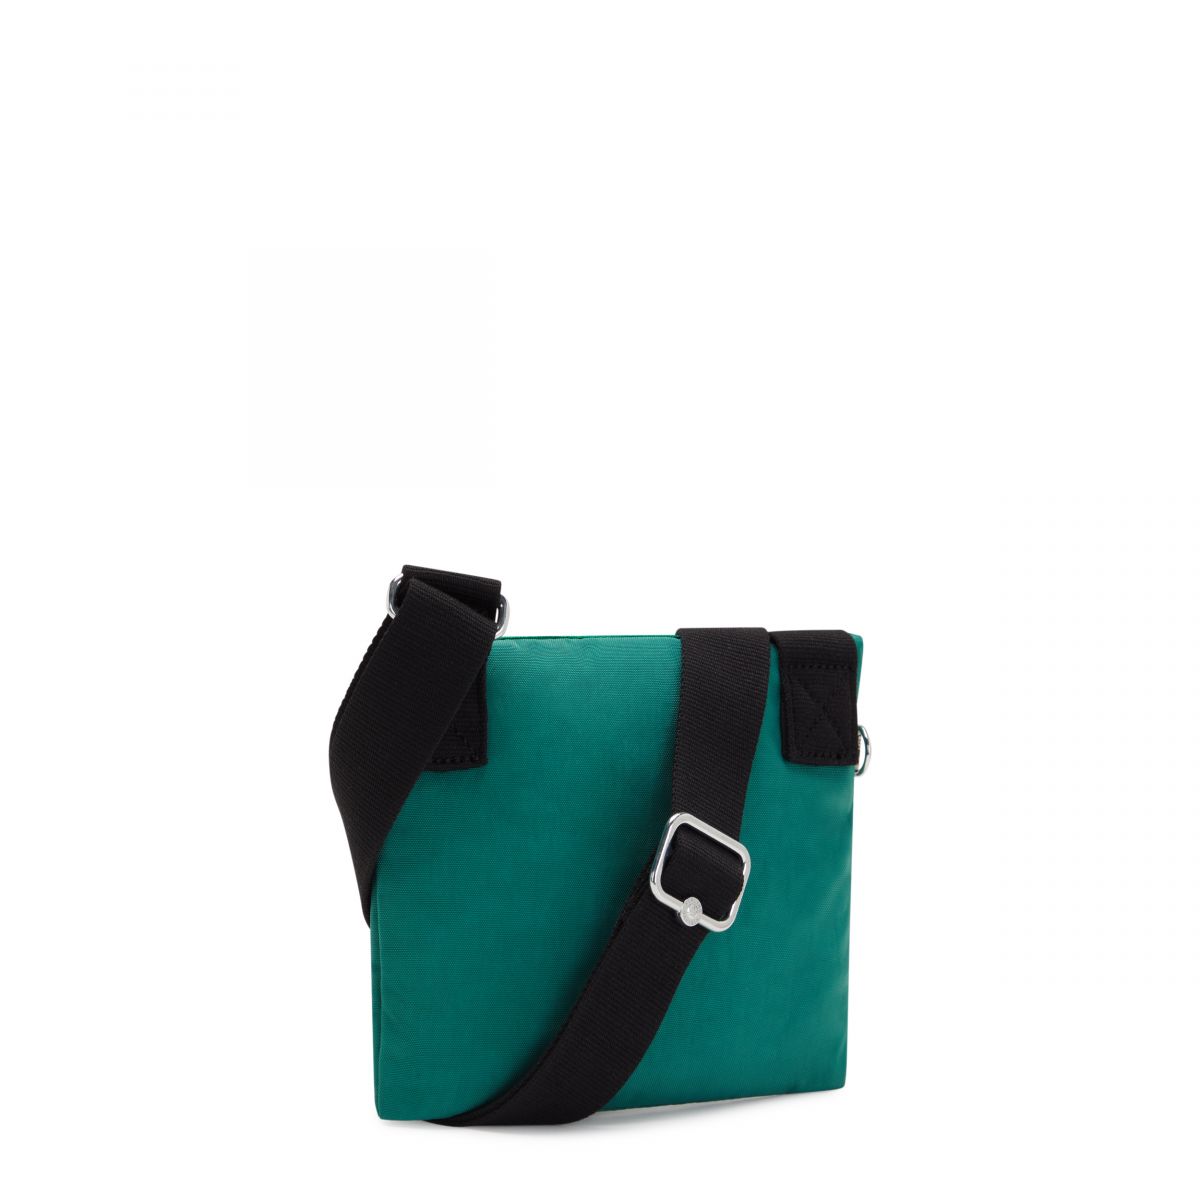 Kipling Gib Small Handbag in Cool Green